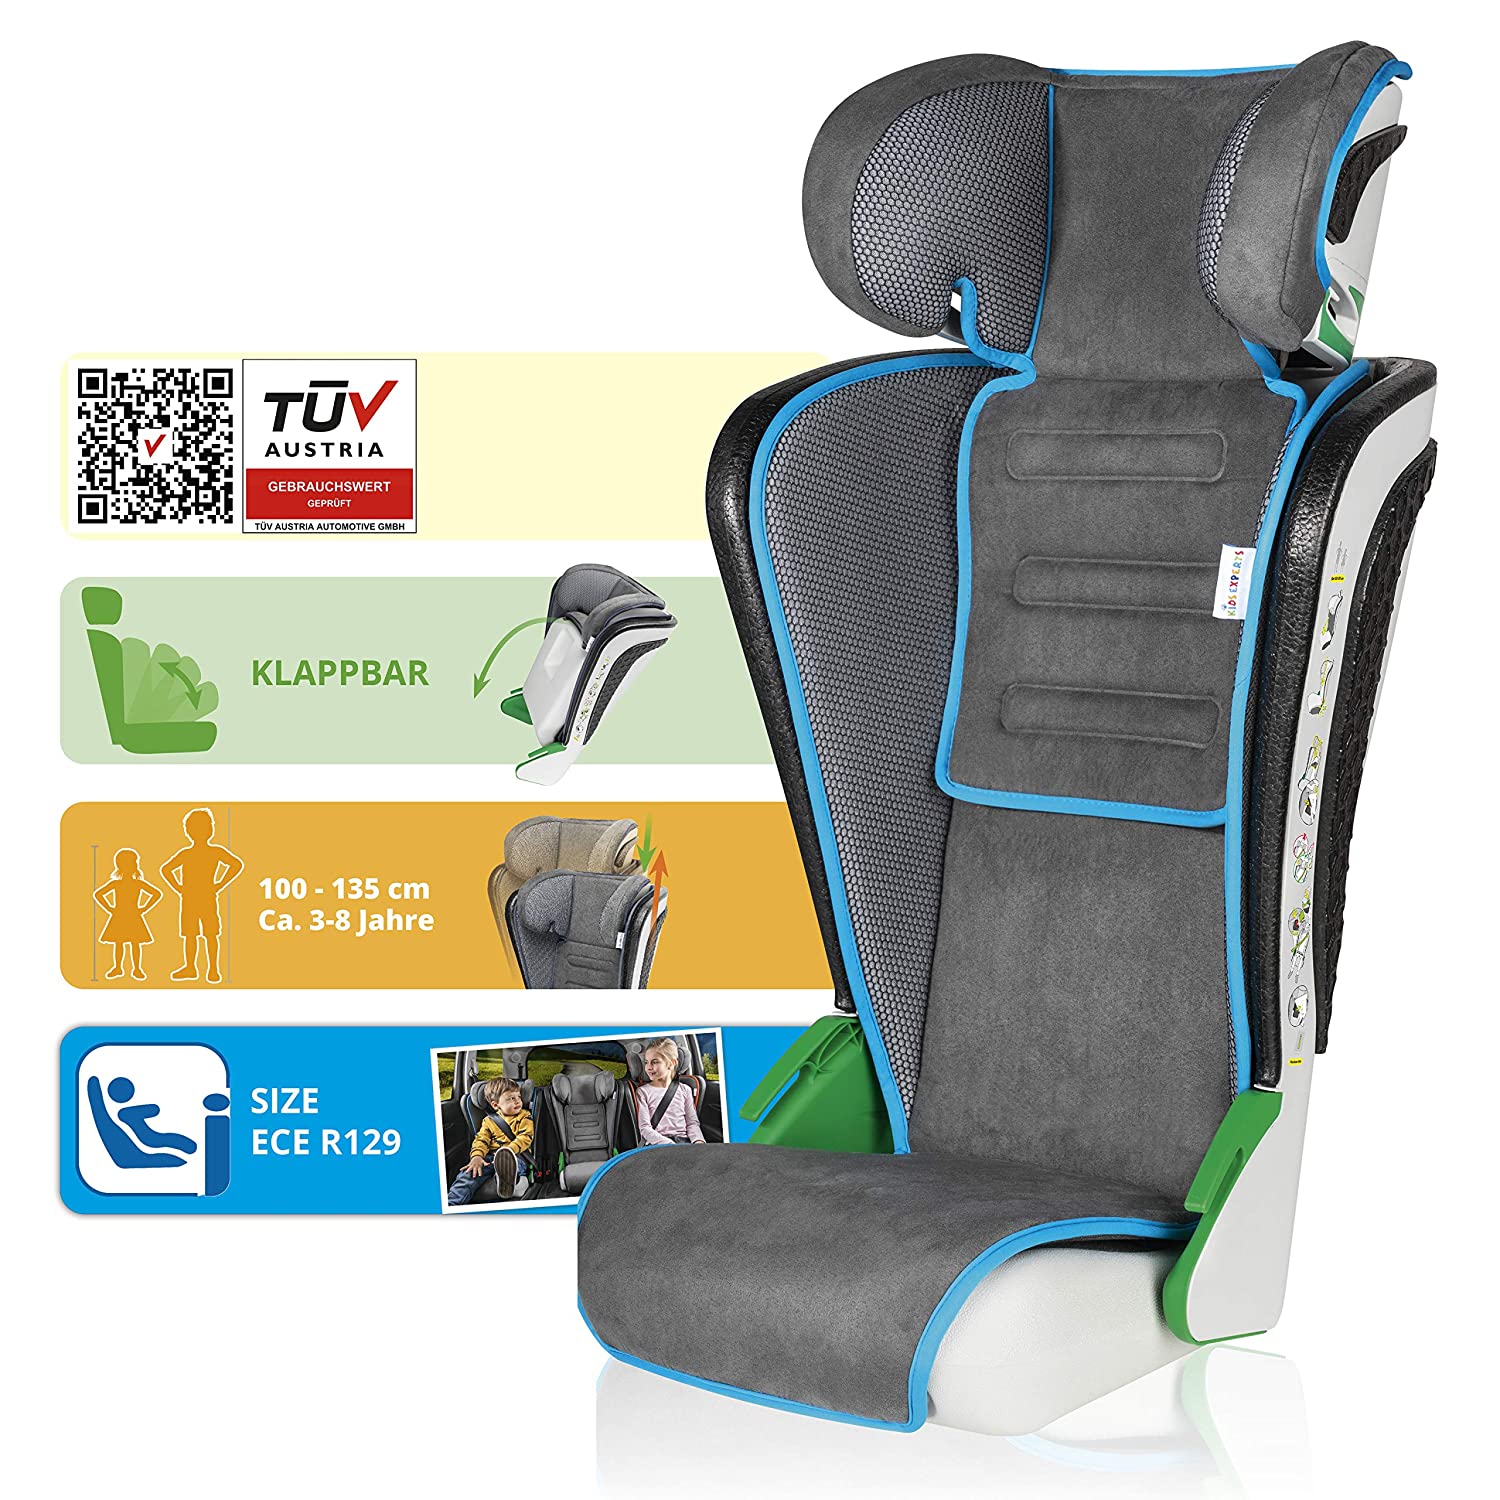 http://honestforwarder.com/uploads/product/6kjwrOnu7B-walser-noemi-car-child-seat-with-height-adjustable-headrest-ece-r129-tested-for-3-8-years-blue0.jpg